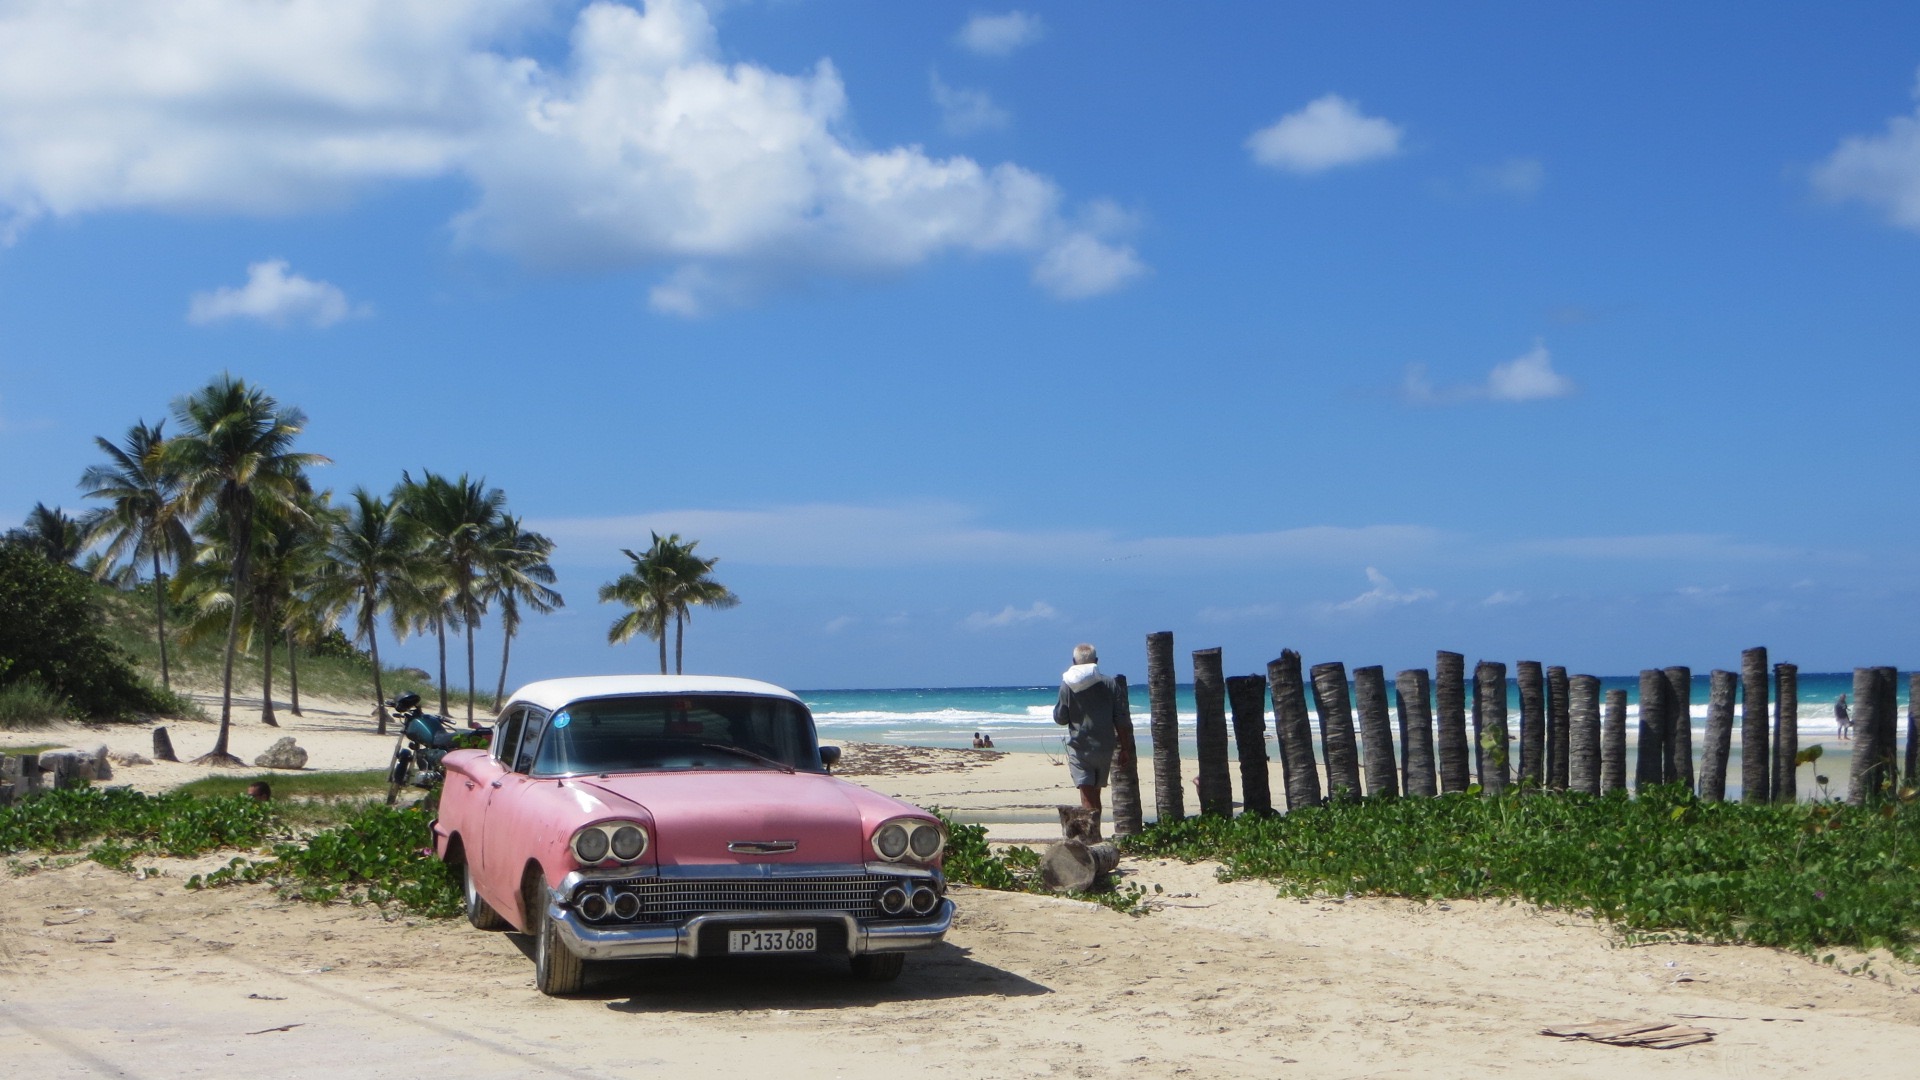 Kuba Playas del Este Bocaciega Traumstrand mit Palmen und Oldtimer 